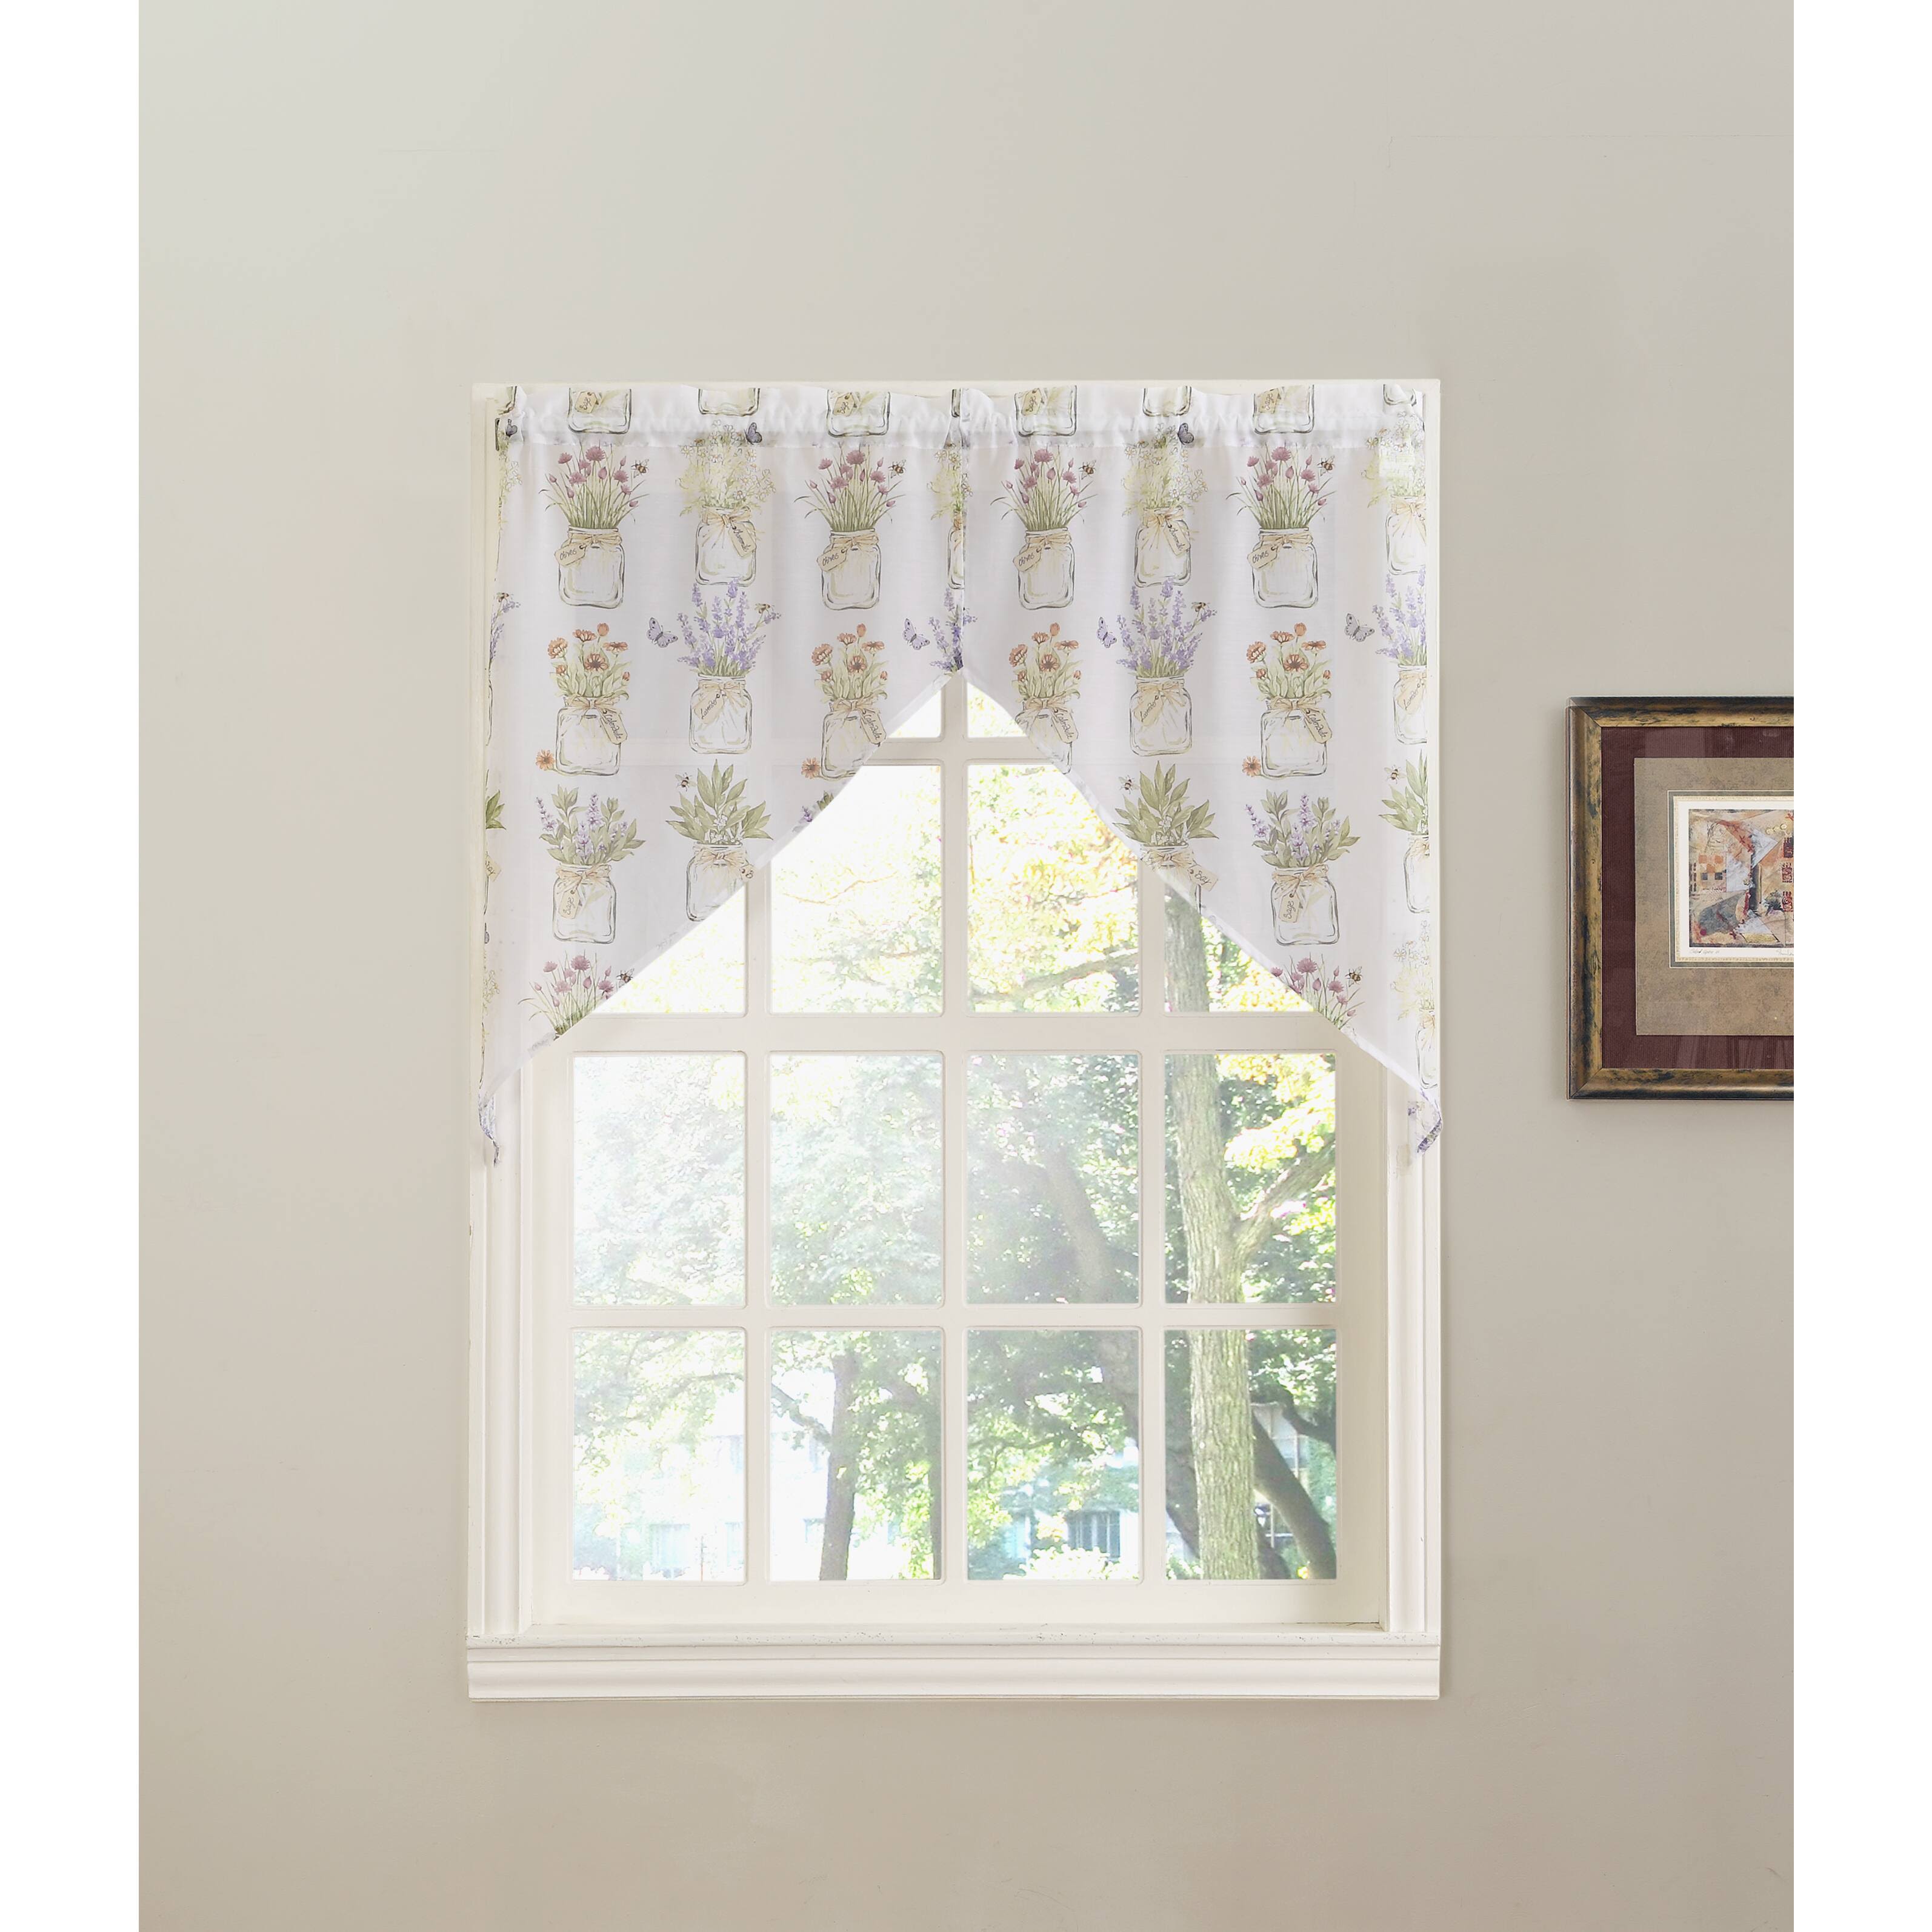 NO. 918 Eve's Garden Floral Kitchen Curtain Swag Pair, 54" x 38", White